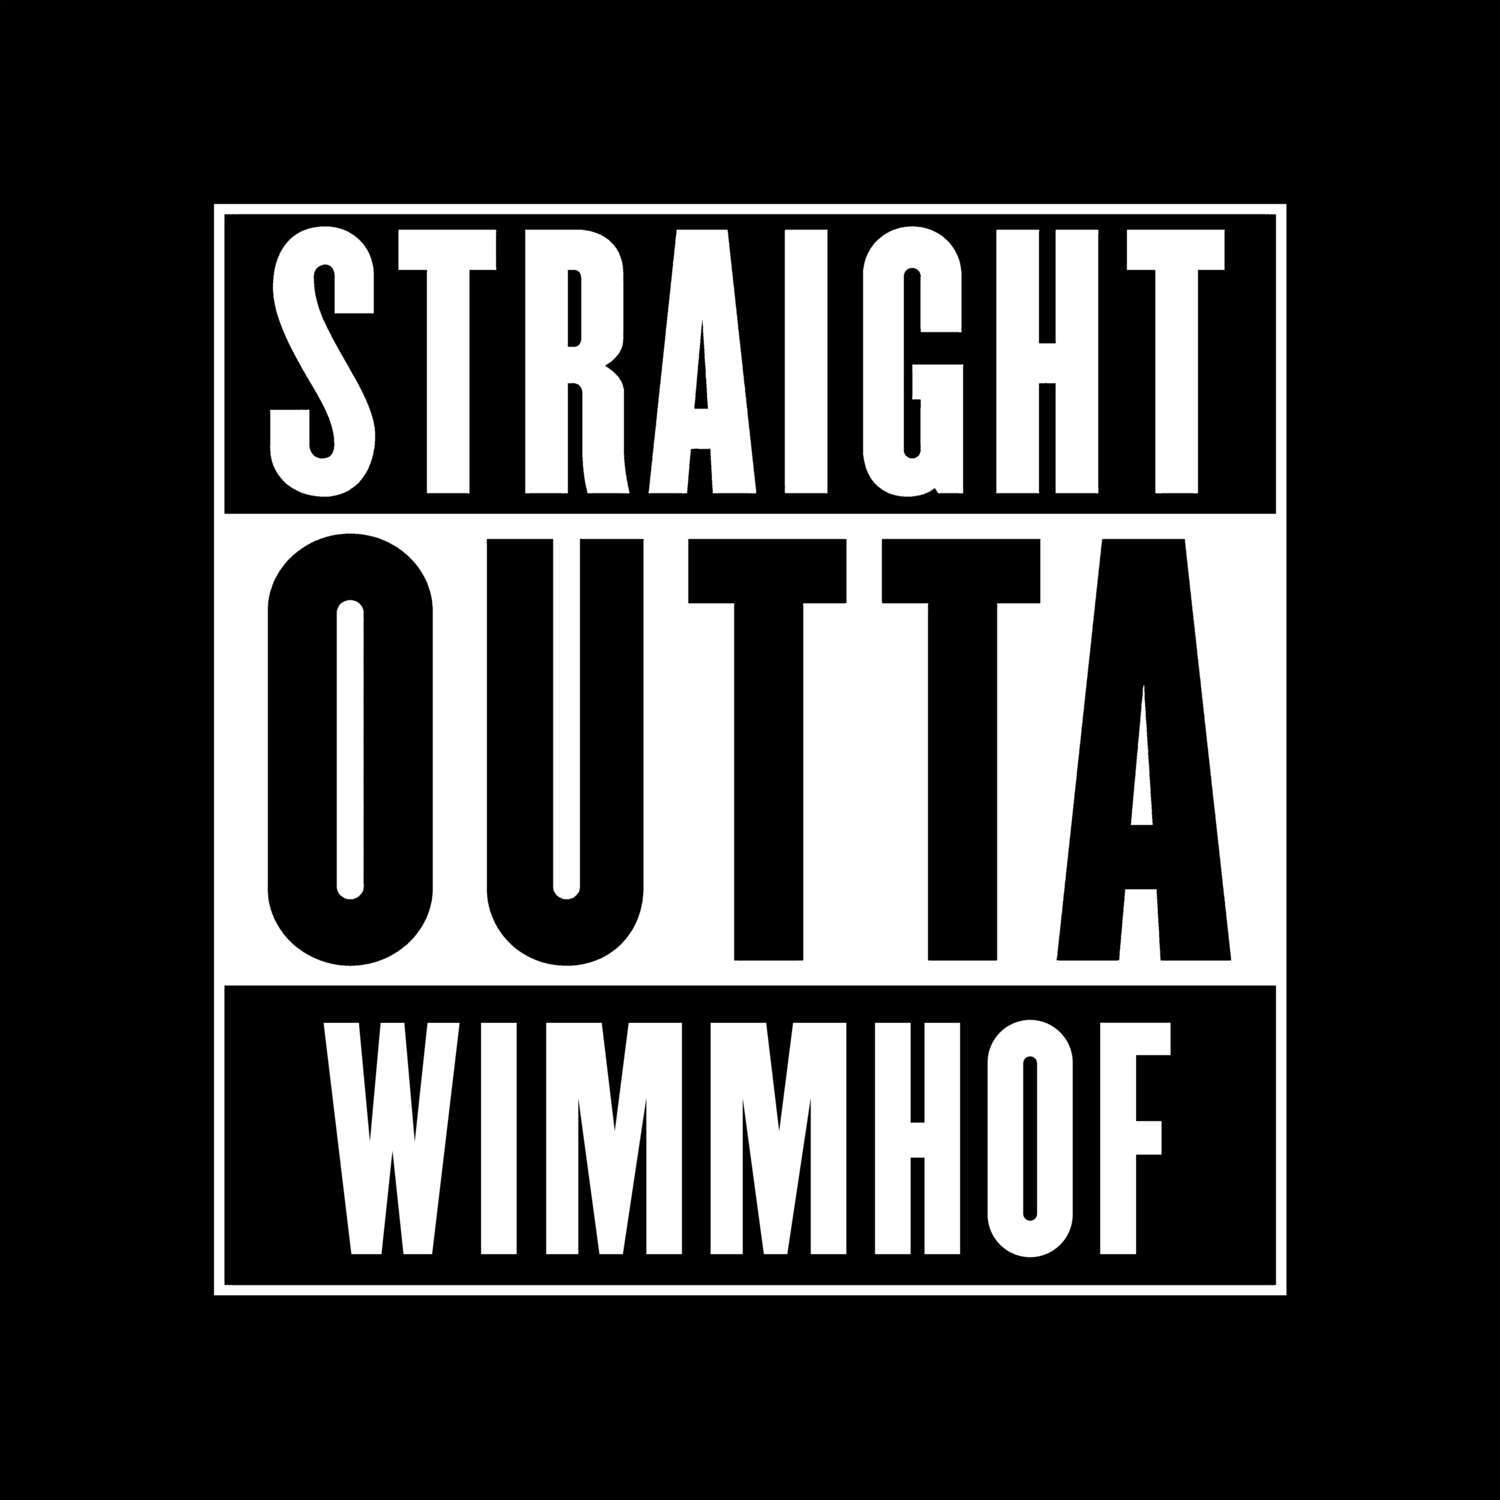 Wimmhof T-Shirt »Straight Outta«